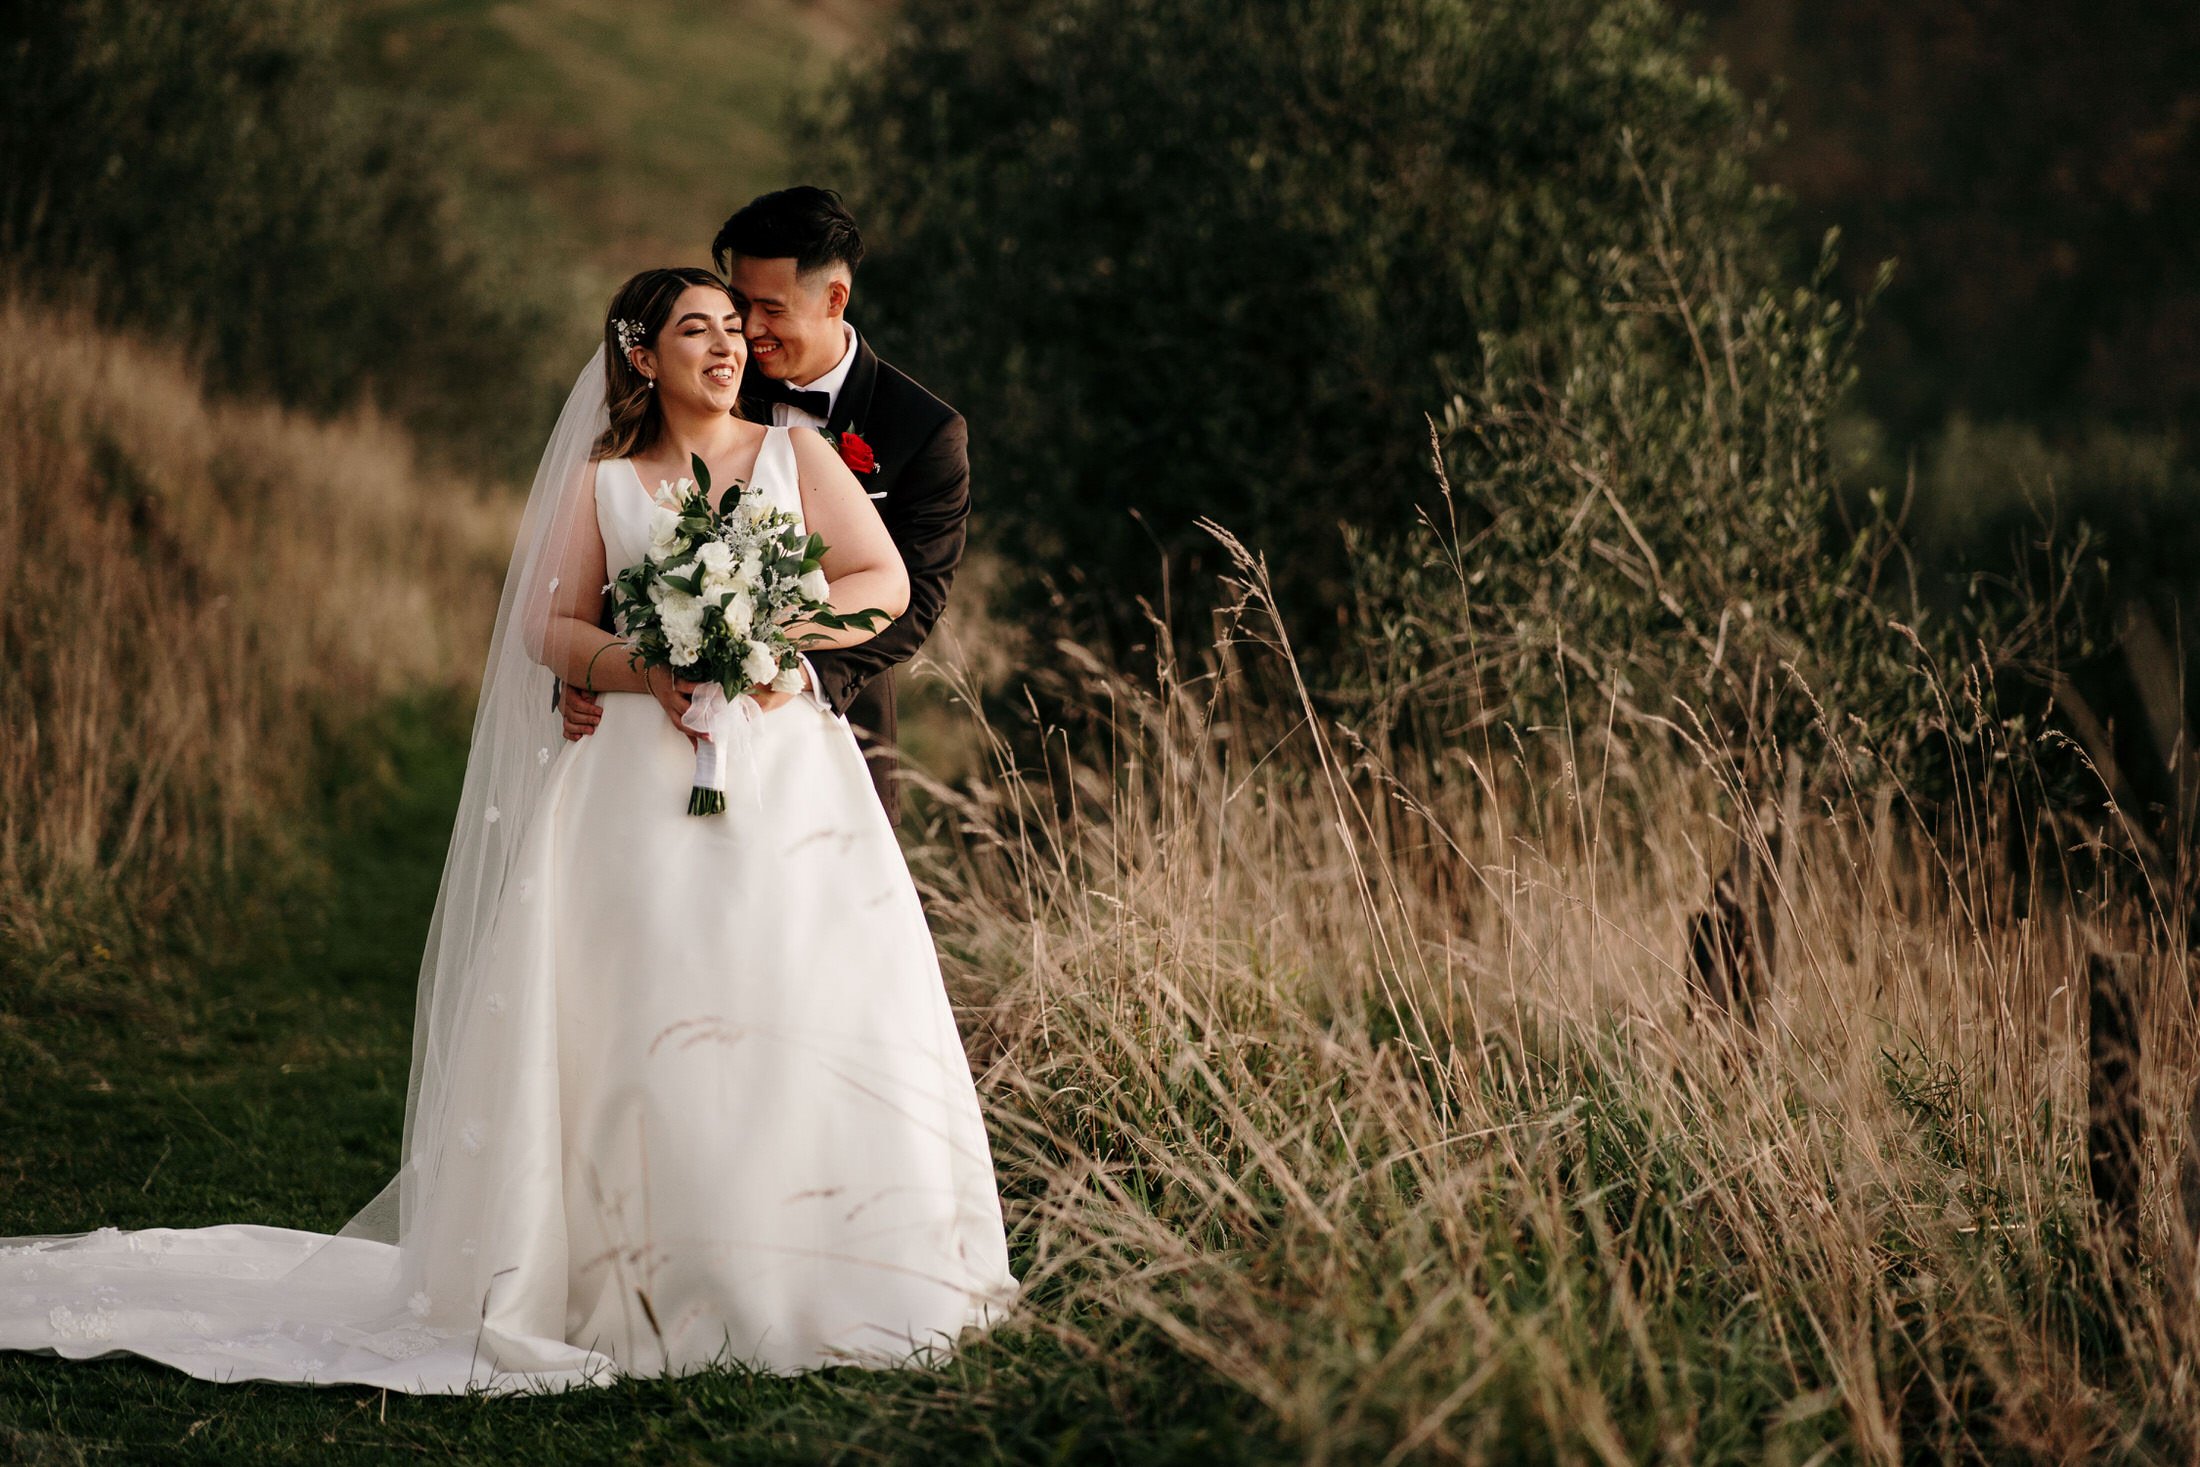 Auckland Wedding Photographer | Auckland Wedding Videographer | Auckland Wedding Venue | Bracu Estate Venue | South Auckland Venue | Auckland Photographer | Hill side Wedding Photography